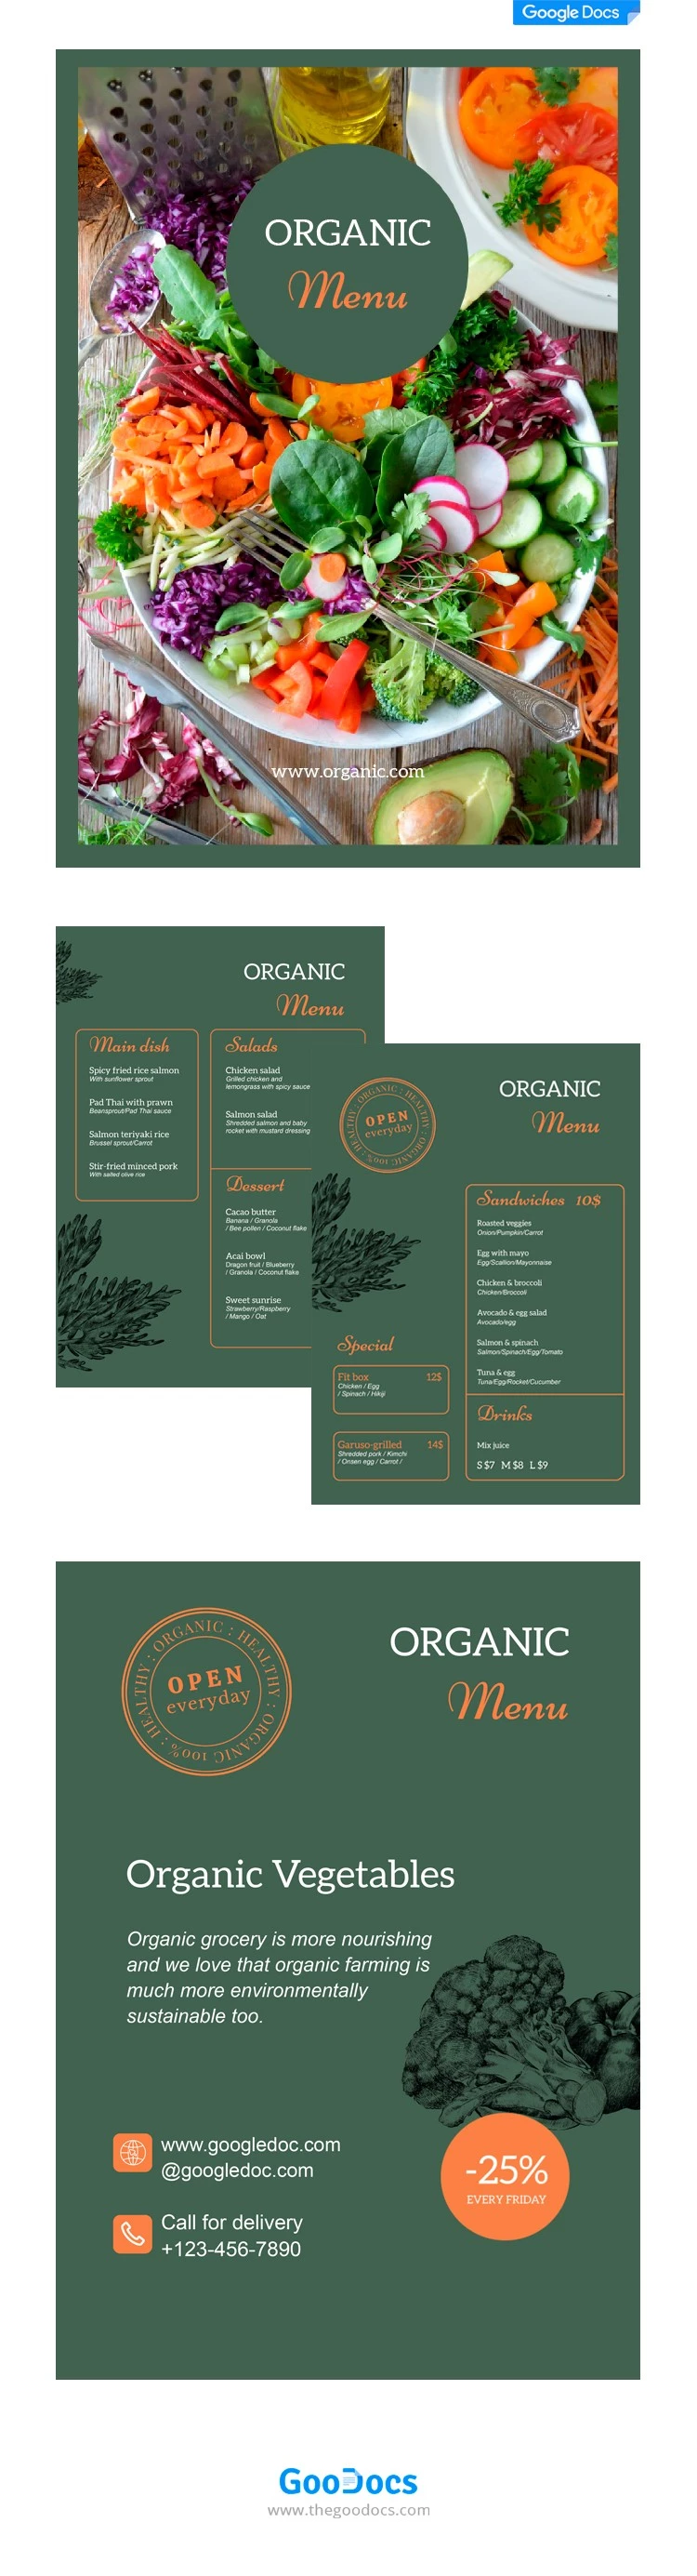 Organic Food Menu - free Google Docs Template - 10062112